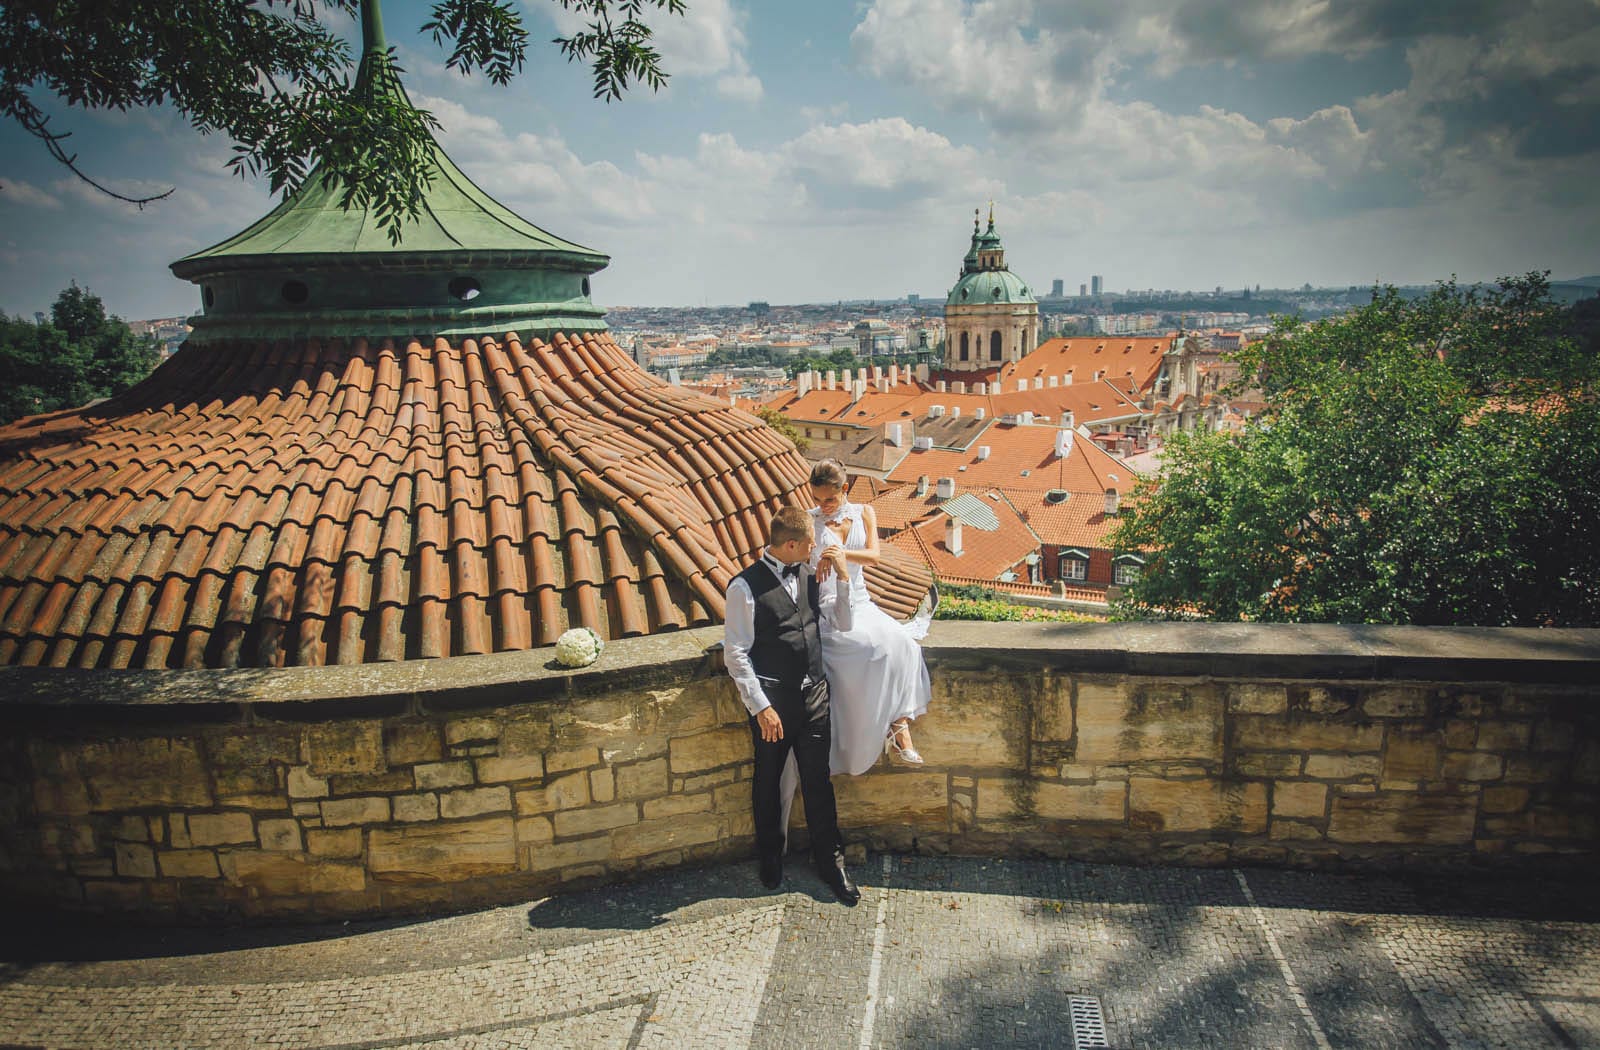 Old Town Hall wedding / O&N / Prague wedding photography